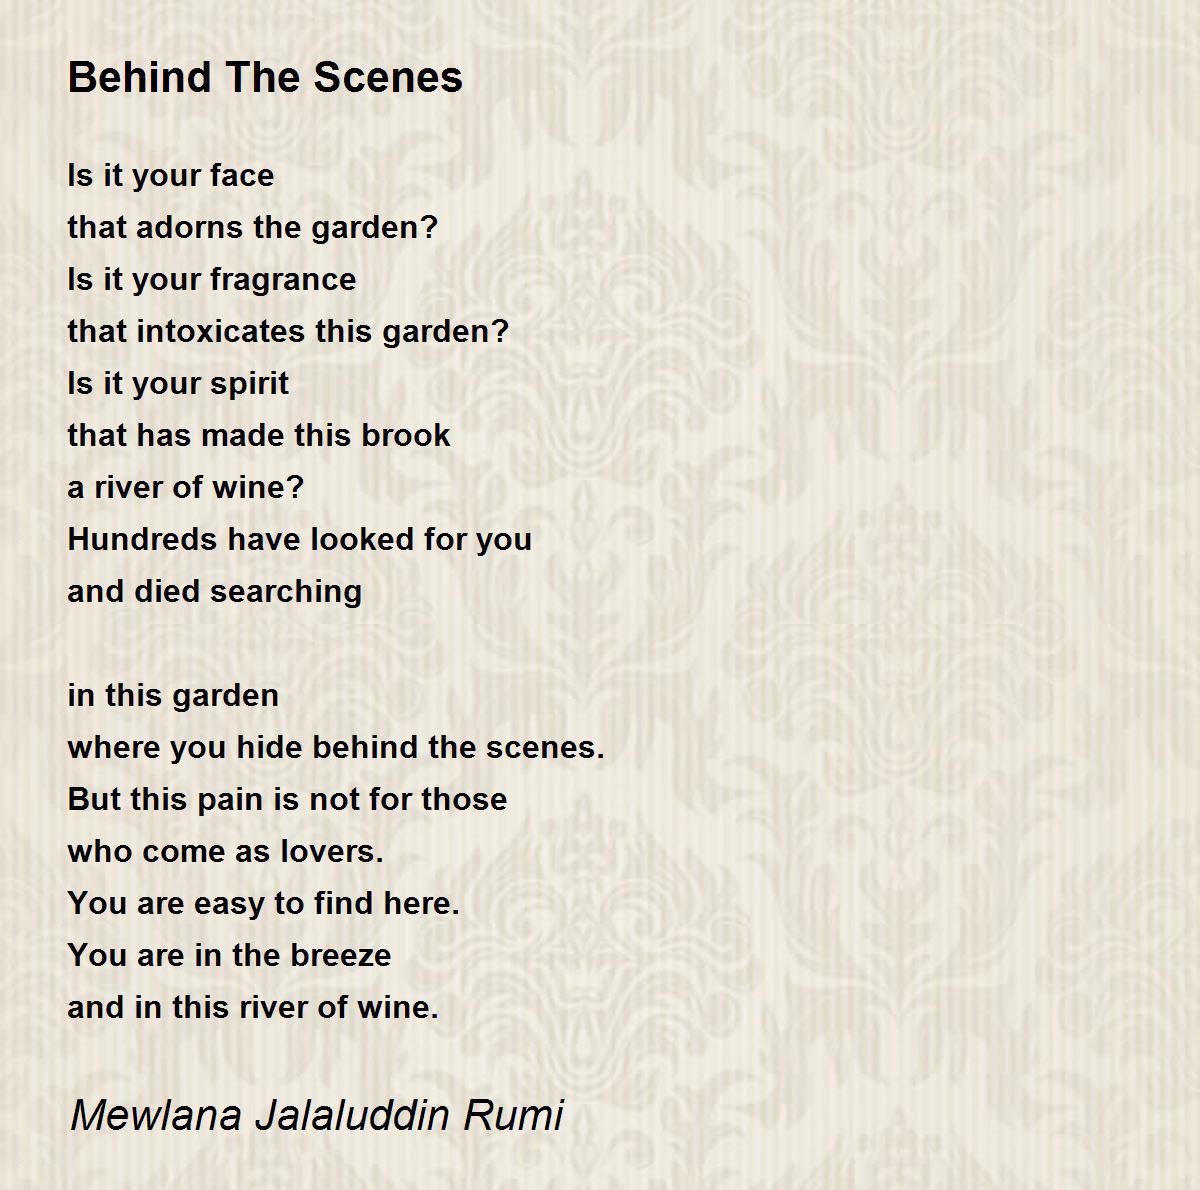 Behind The Scenes Poem by Mewlana Jalaluddin Rumi - Poem 